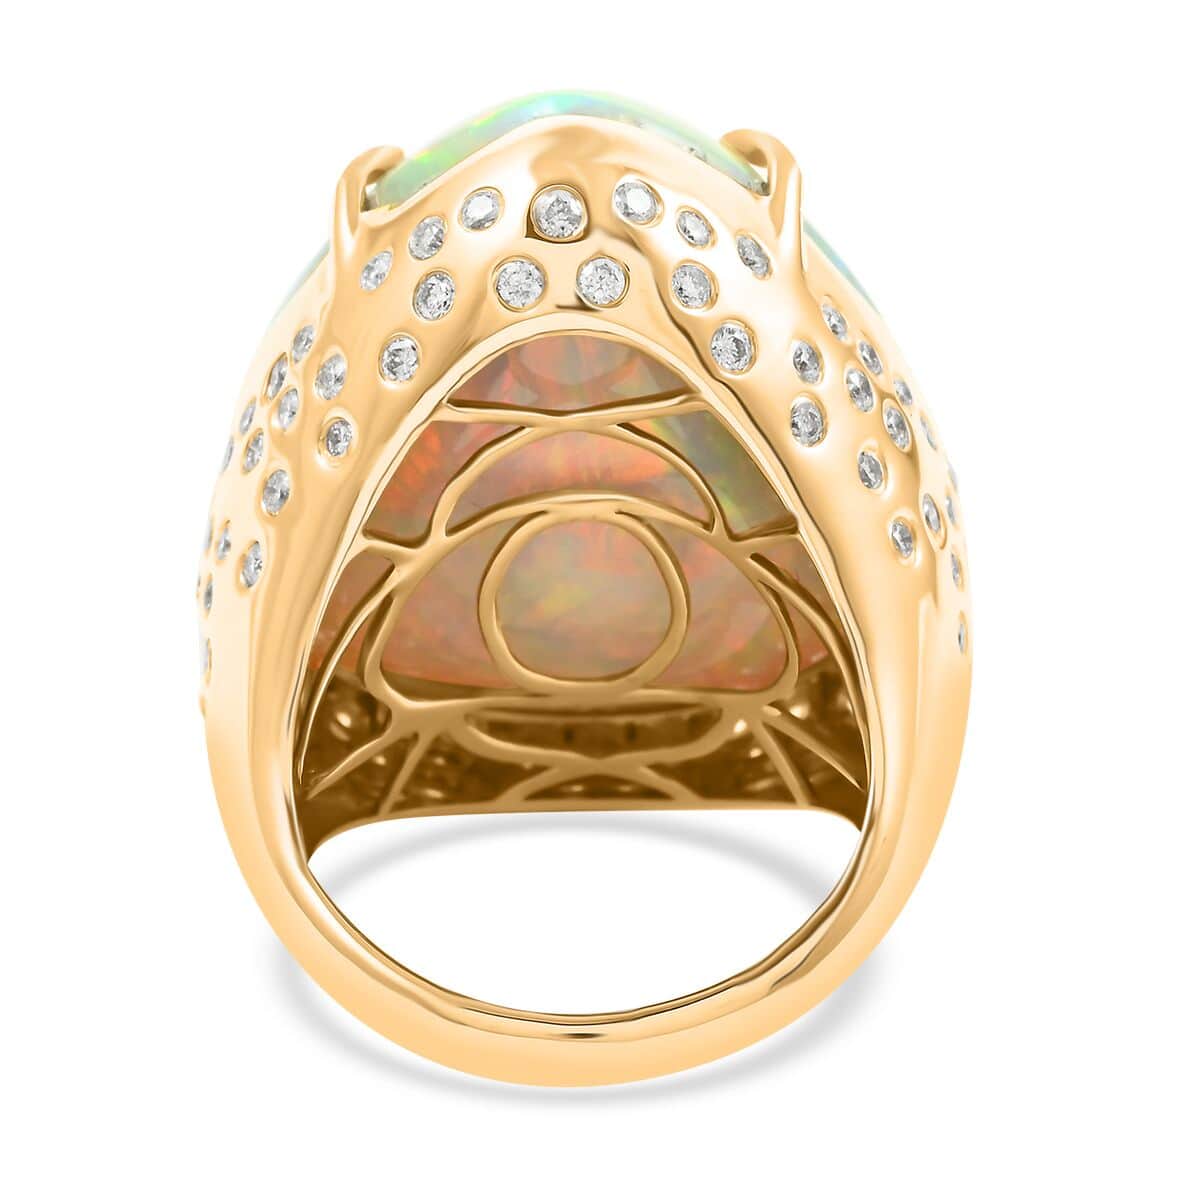 Luxoro 14K Yellow Gold AAAA Ethiopian Welo Opal, Diamond (G-H, I2) Ring (Size 7.0) (10.55 g) 43.65 ctw image number 4